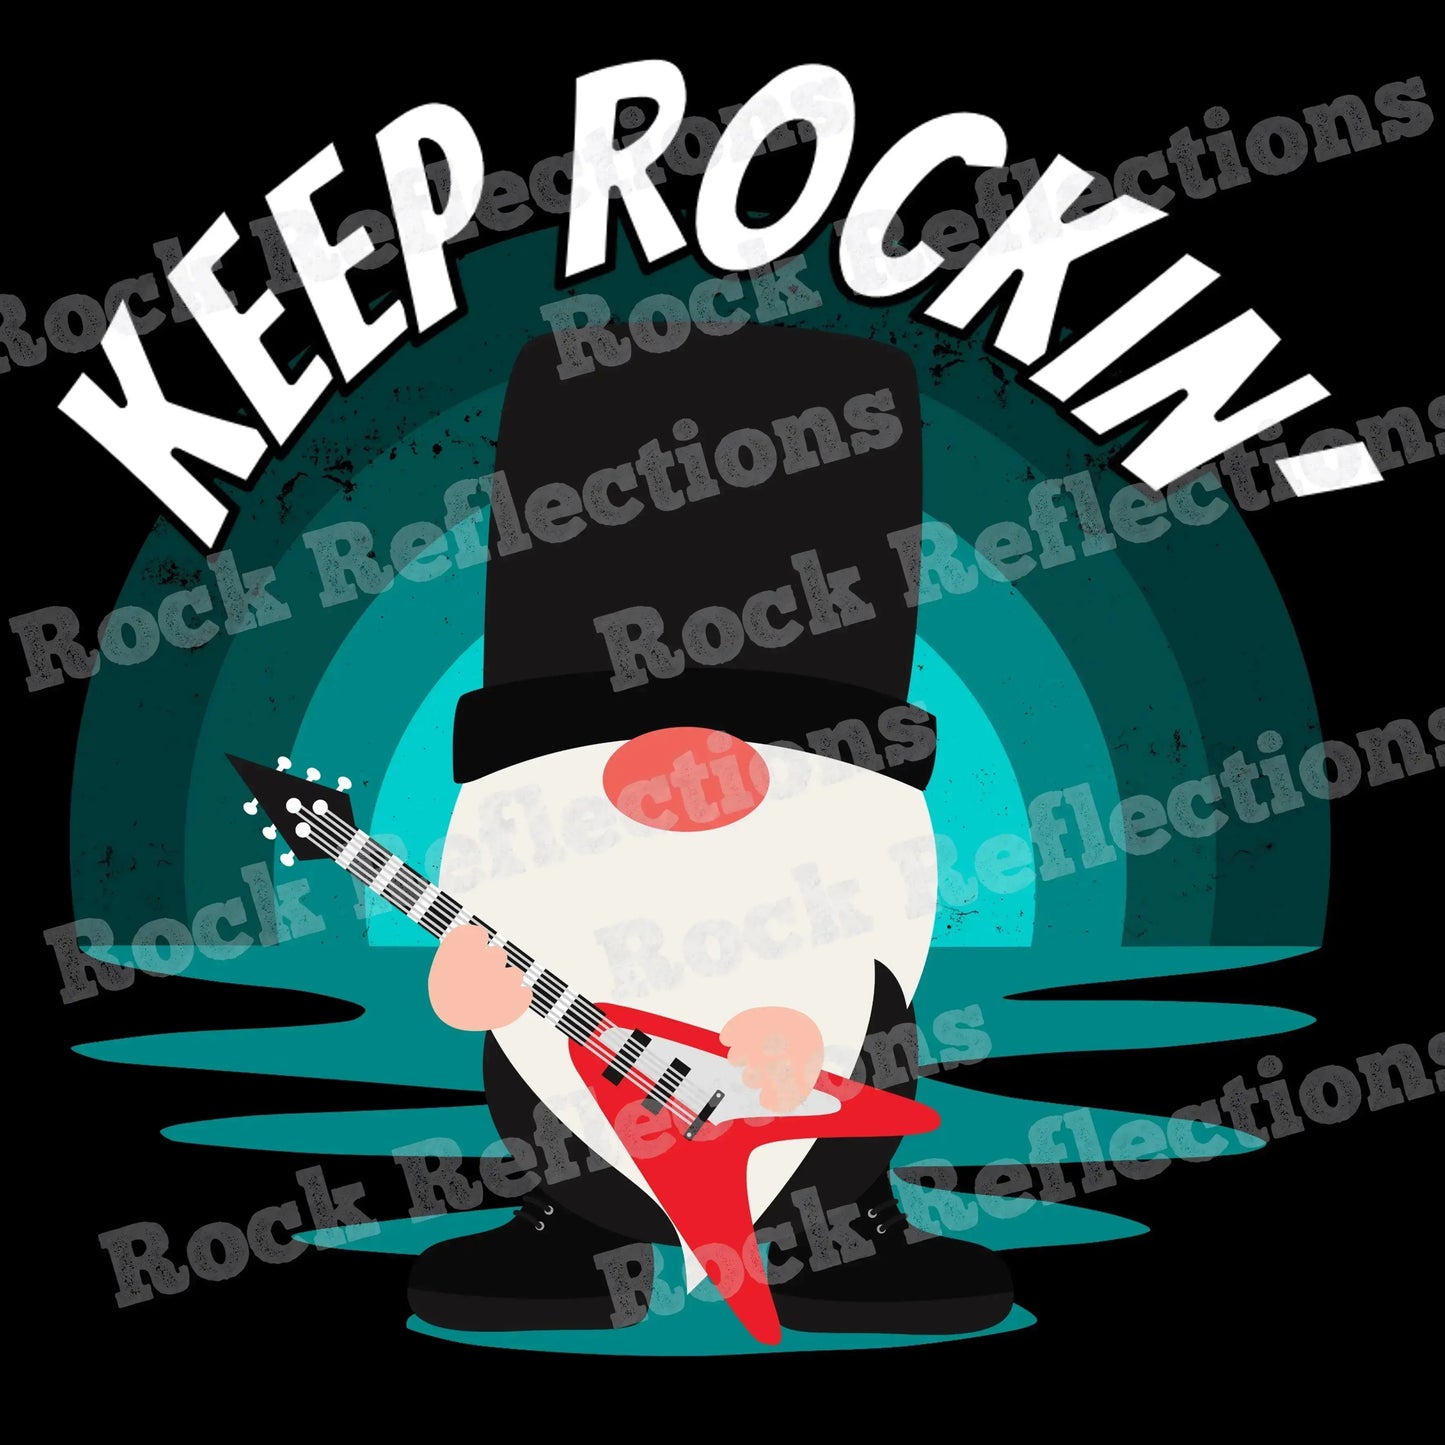 Keep Rockin' Gnome SPOD